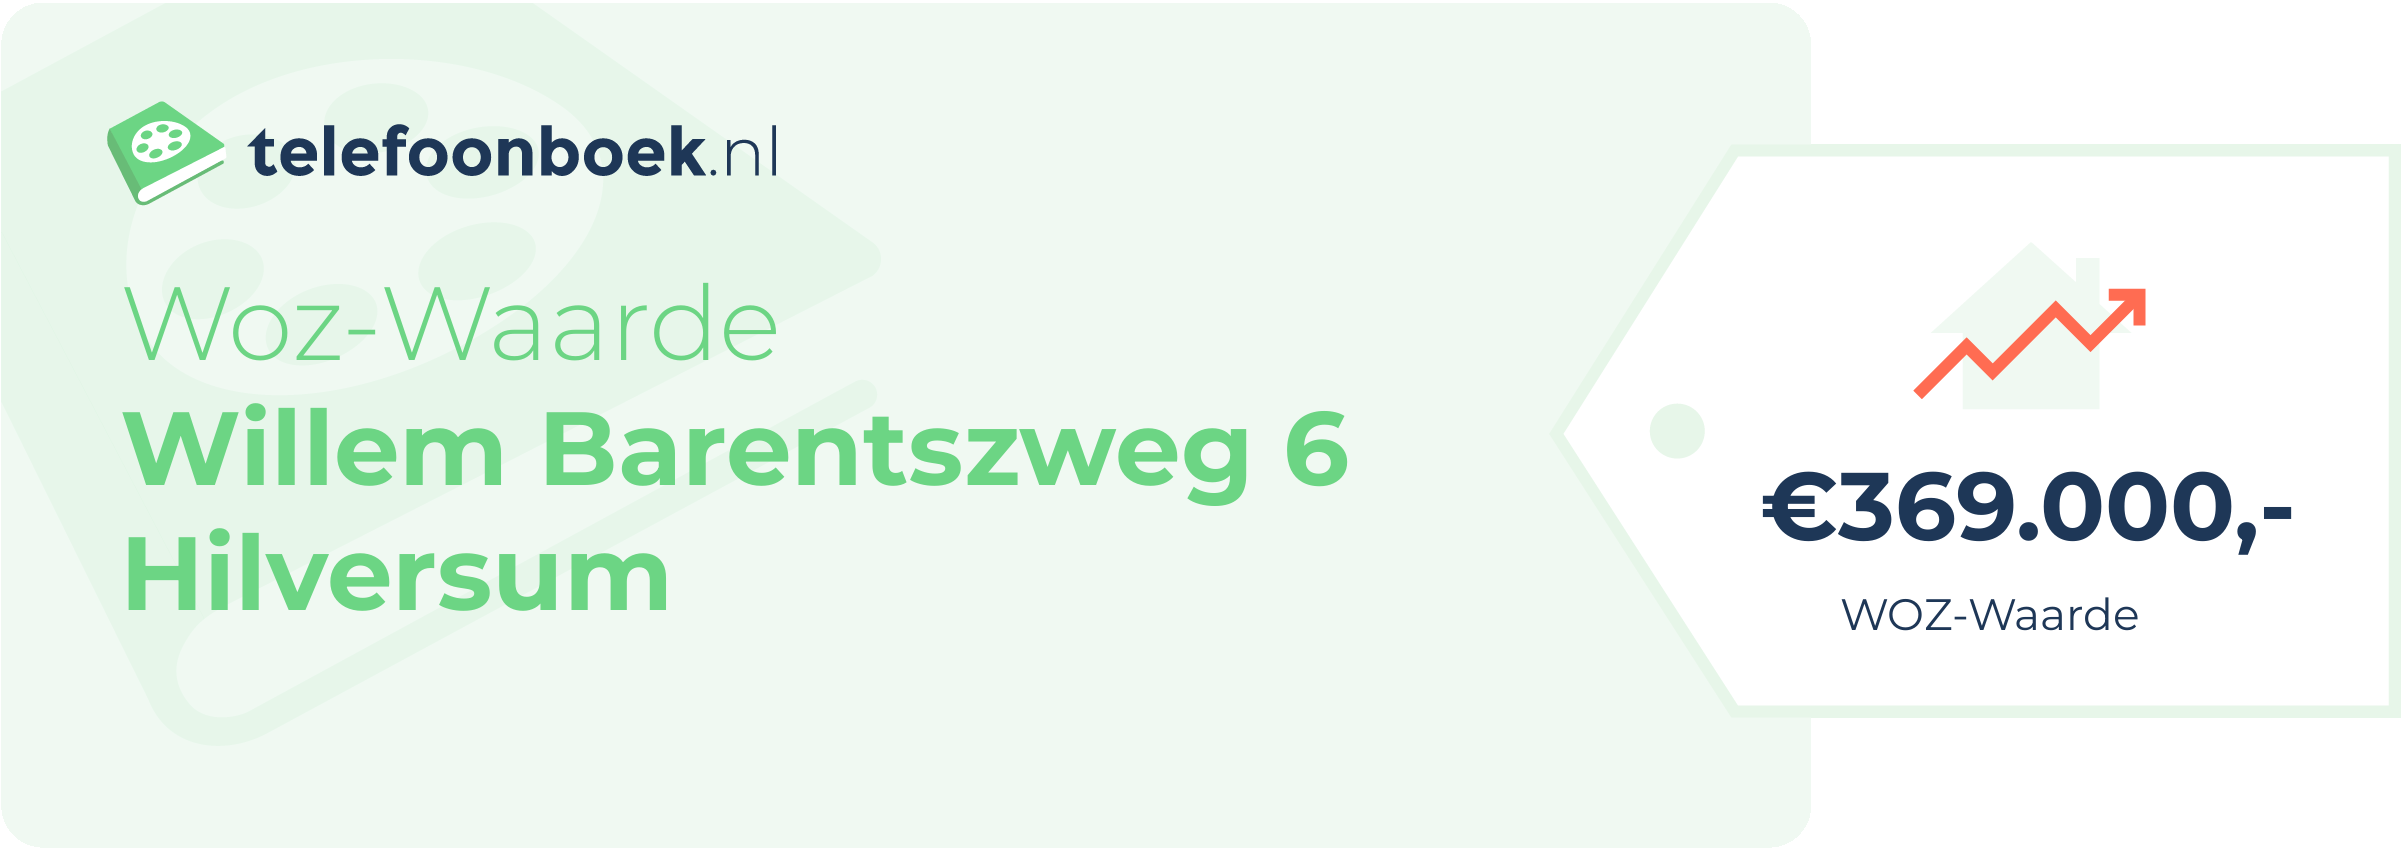 WOZ-waarde Willem Barentszweg 6 Hilversum